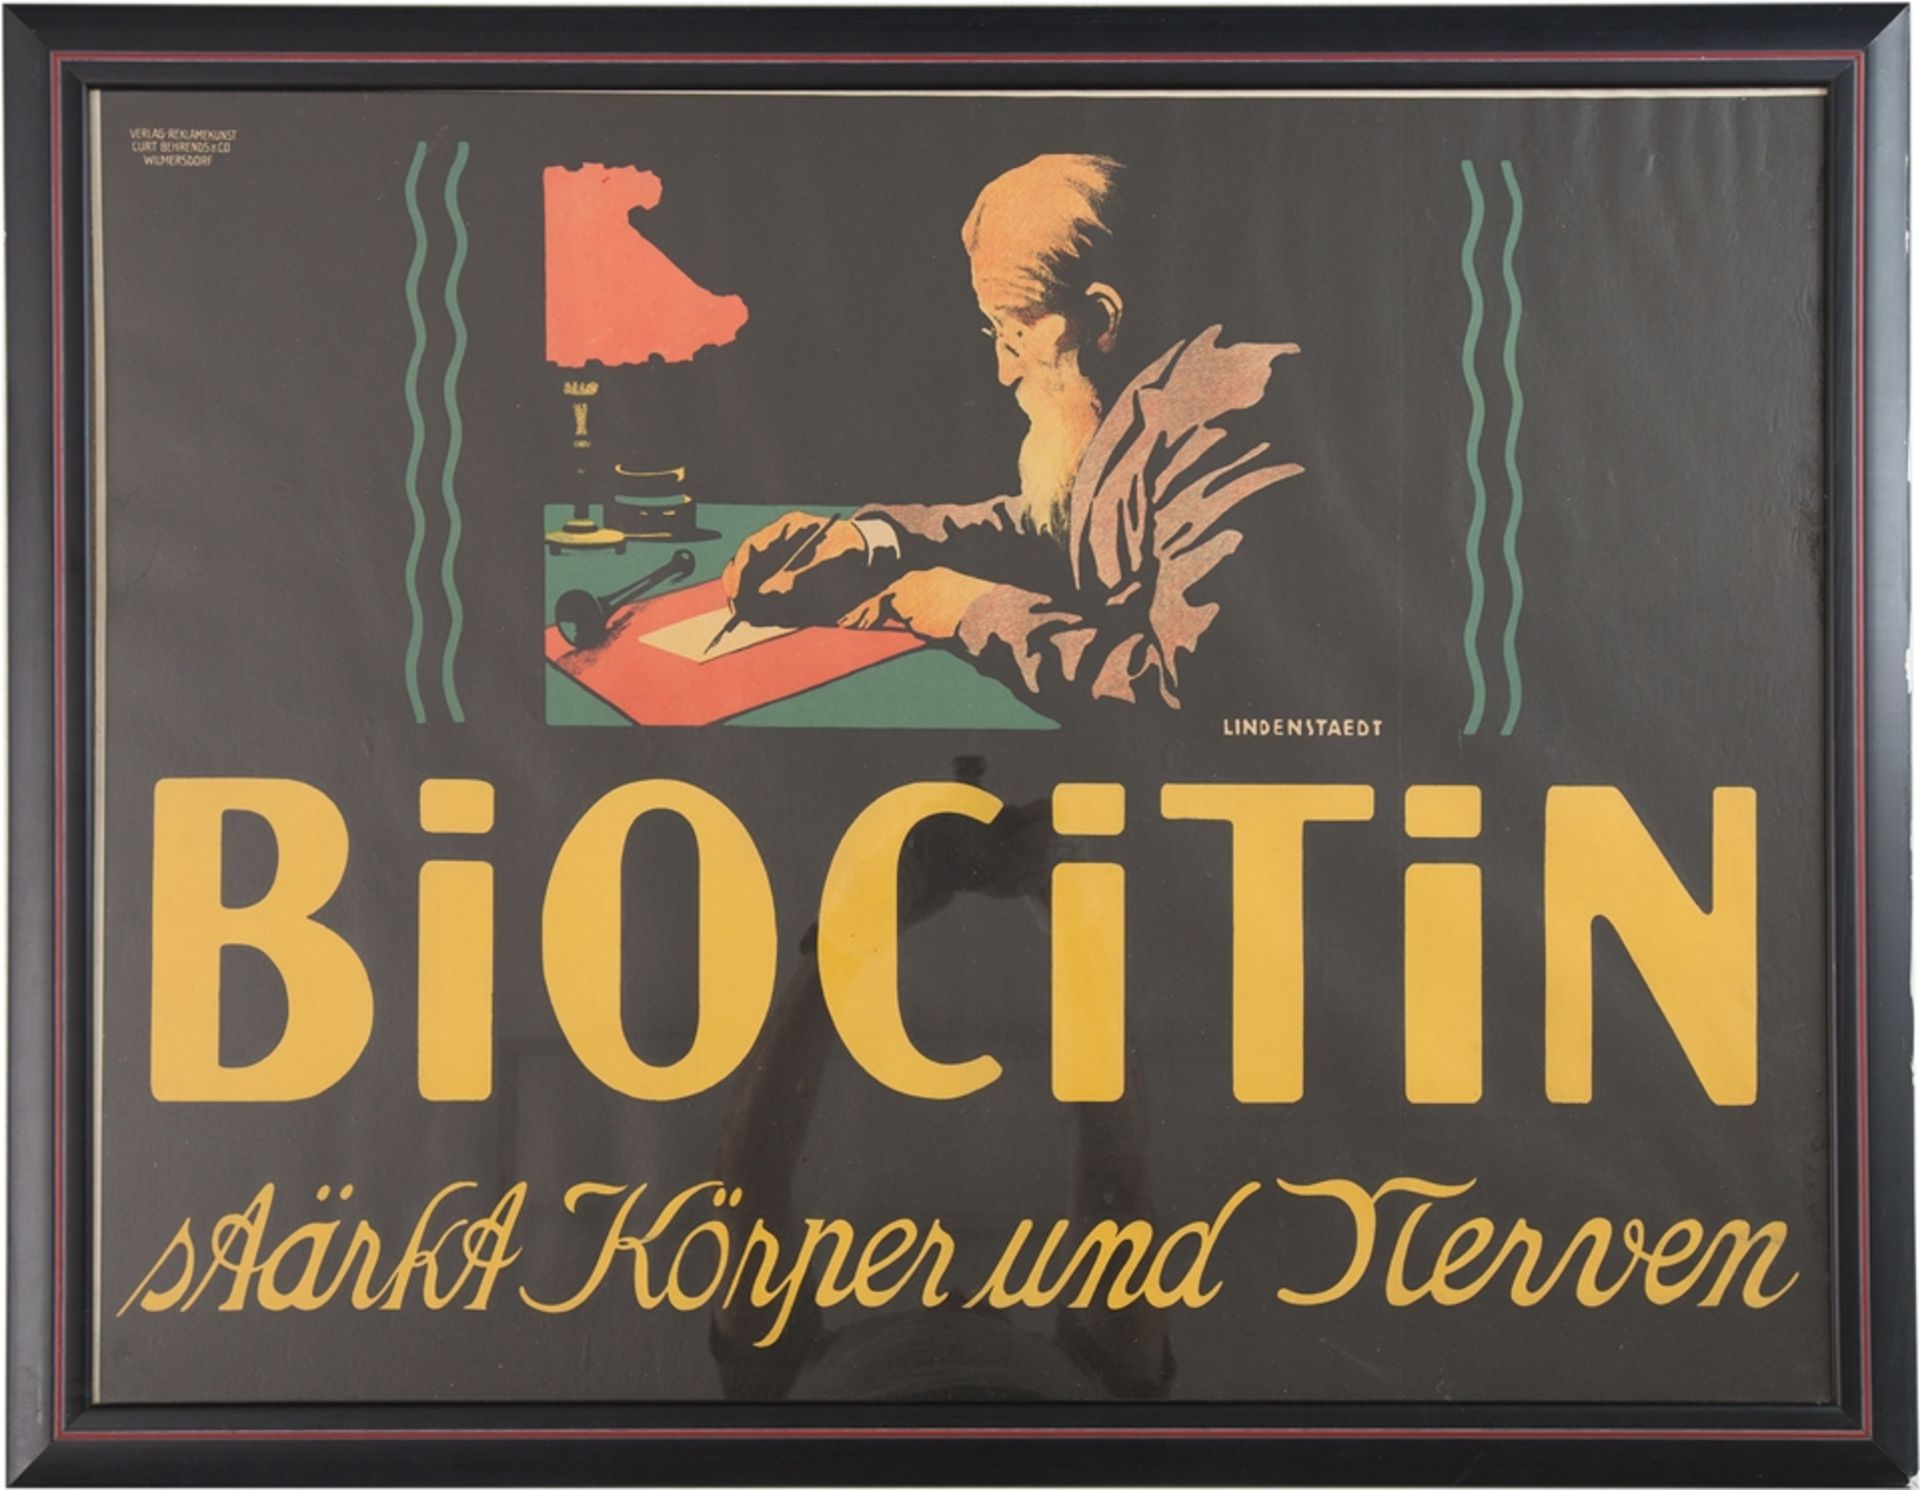 Hans Lindenstaedt (1874-1928), Plakat "Biocitin" (1908)